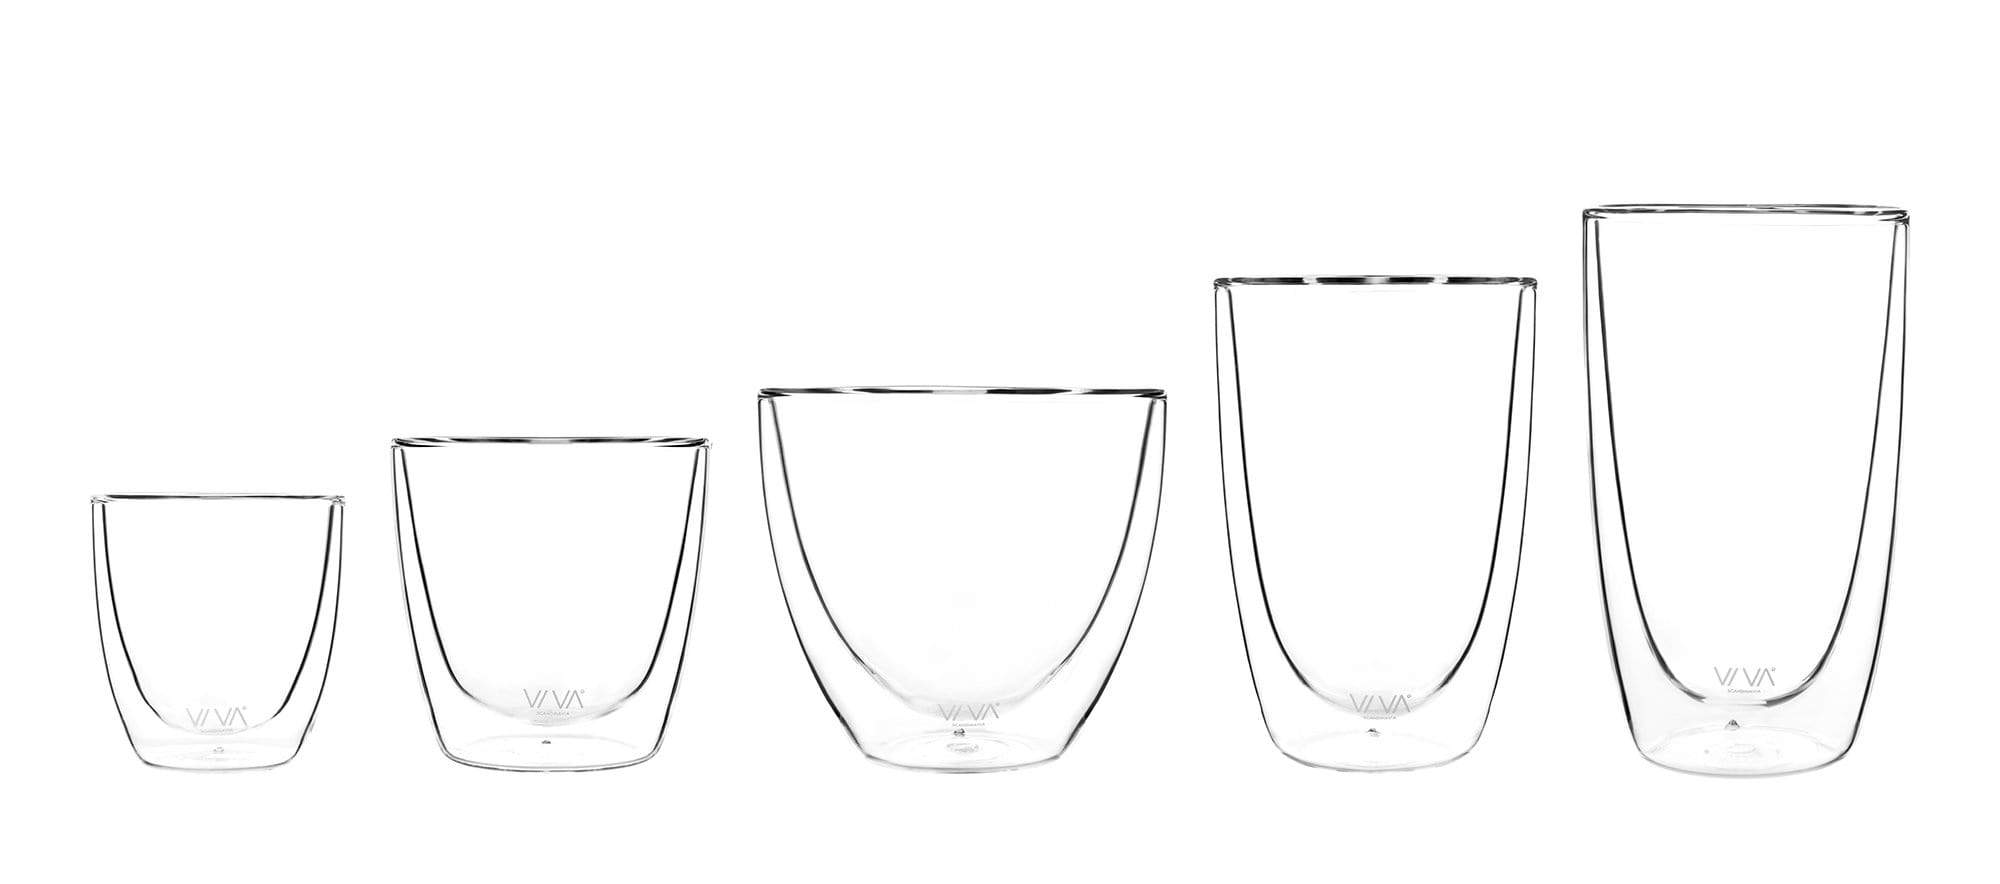 Lauren™ Double Walled Glasses - Set of 2 Cups & Mugs VIVA Scandinavia 